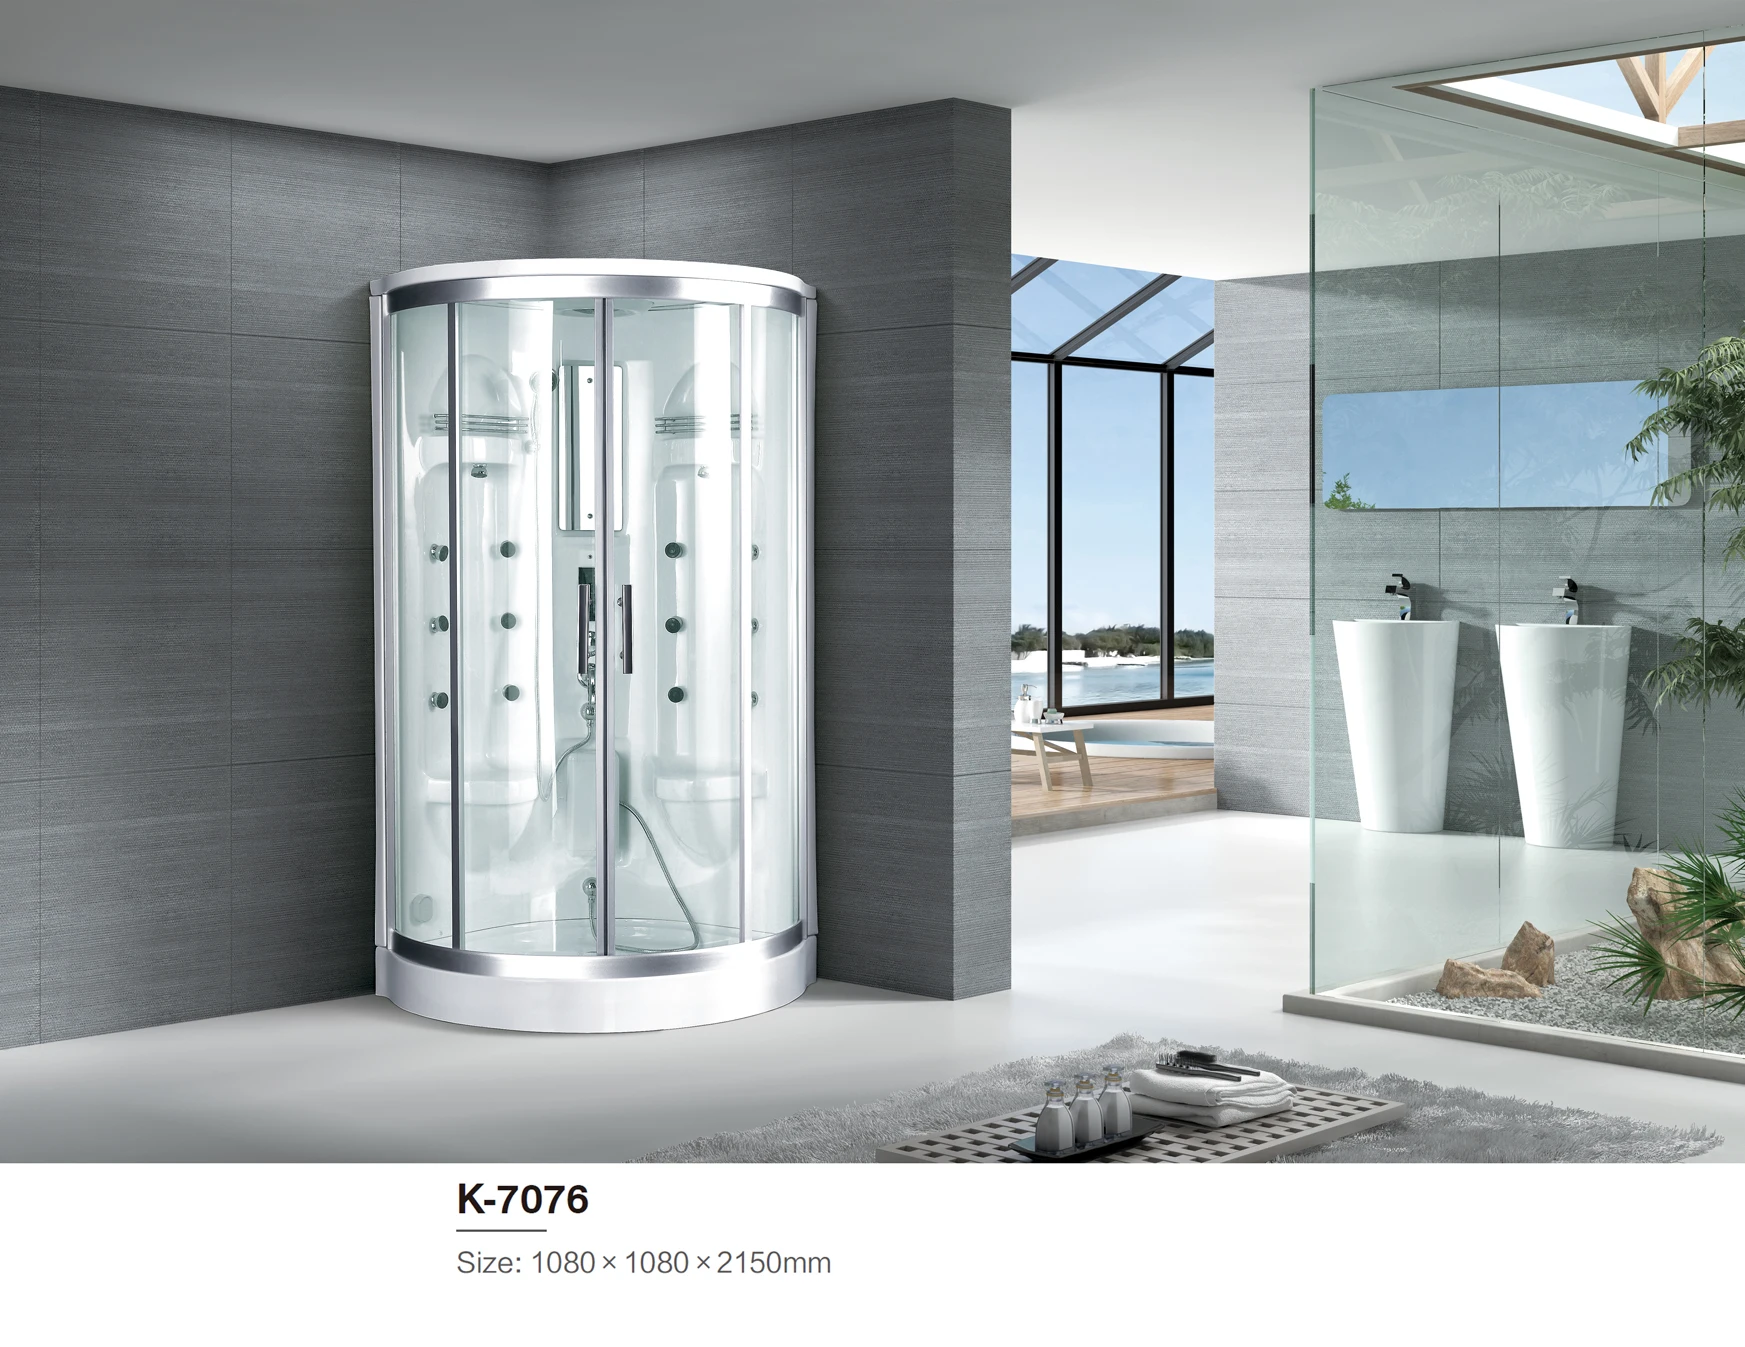 European bath indoor digital cubicle control panel whirlpool acrylic massage soaking jet shower combos steam room K7076